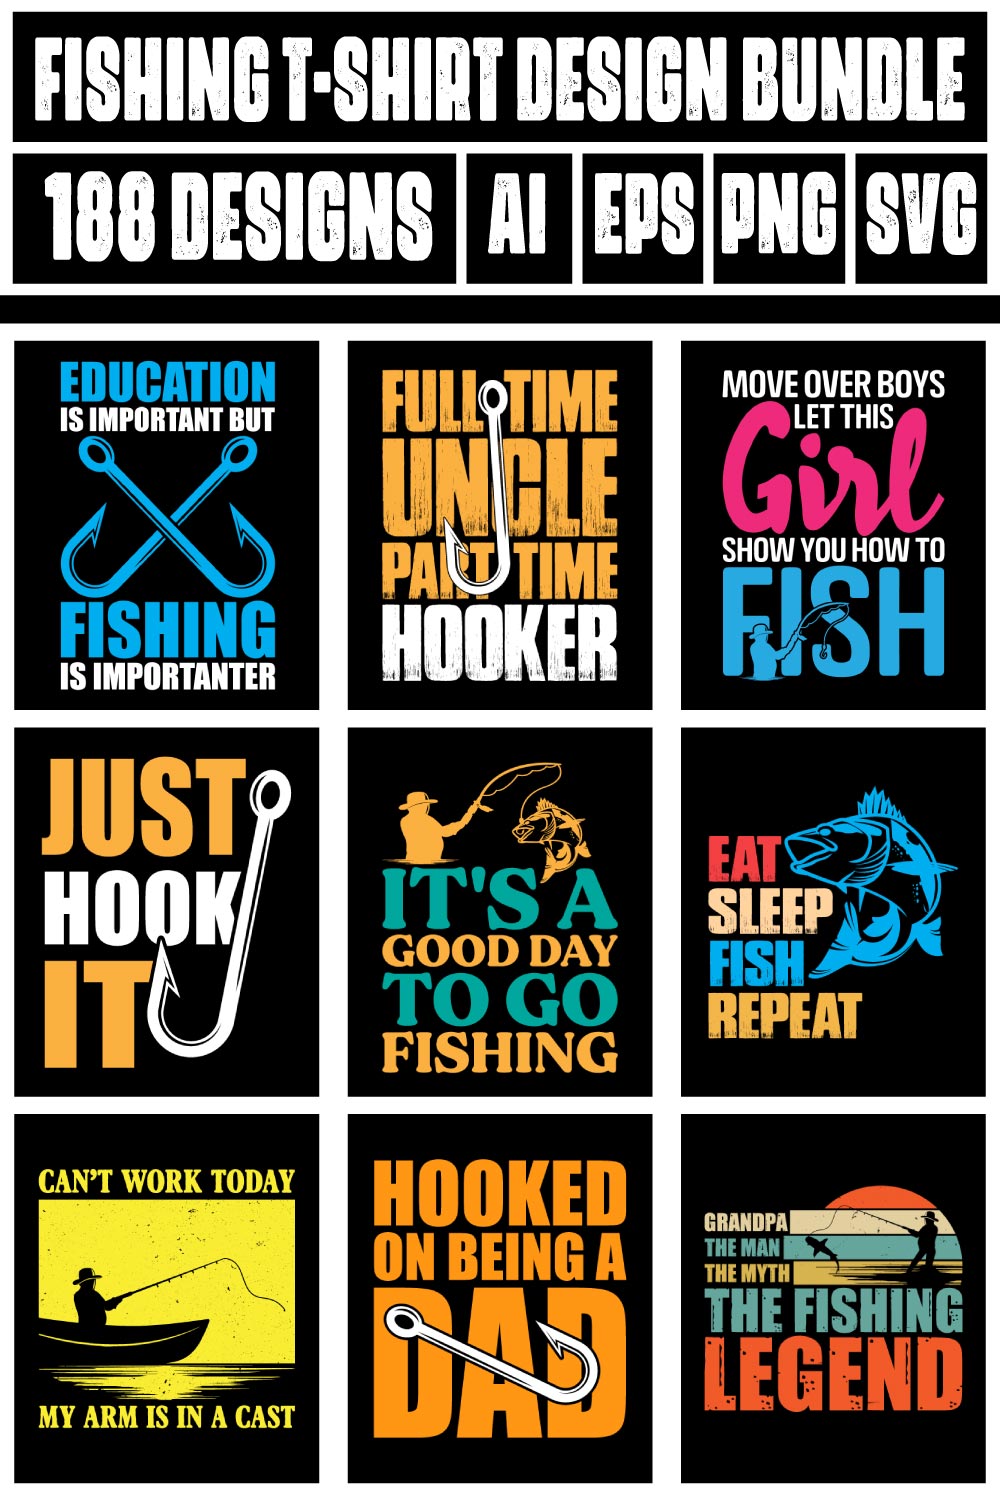 Fishing T-shirt Design Bundle 2 pinterest preview image.